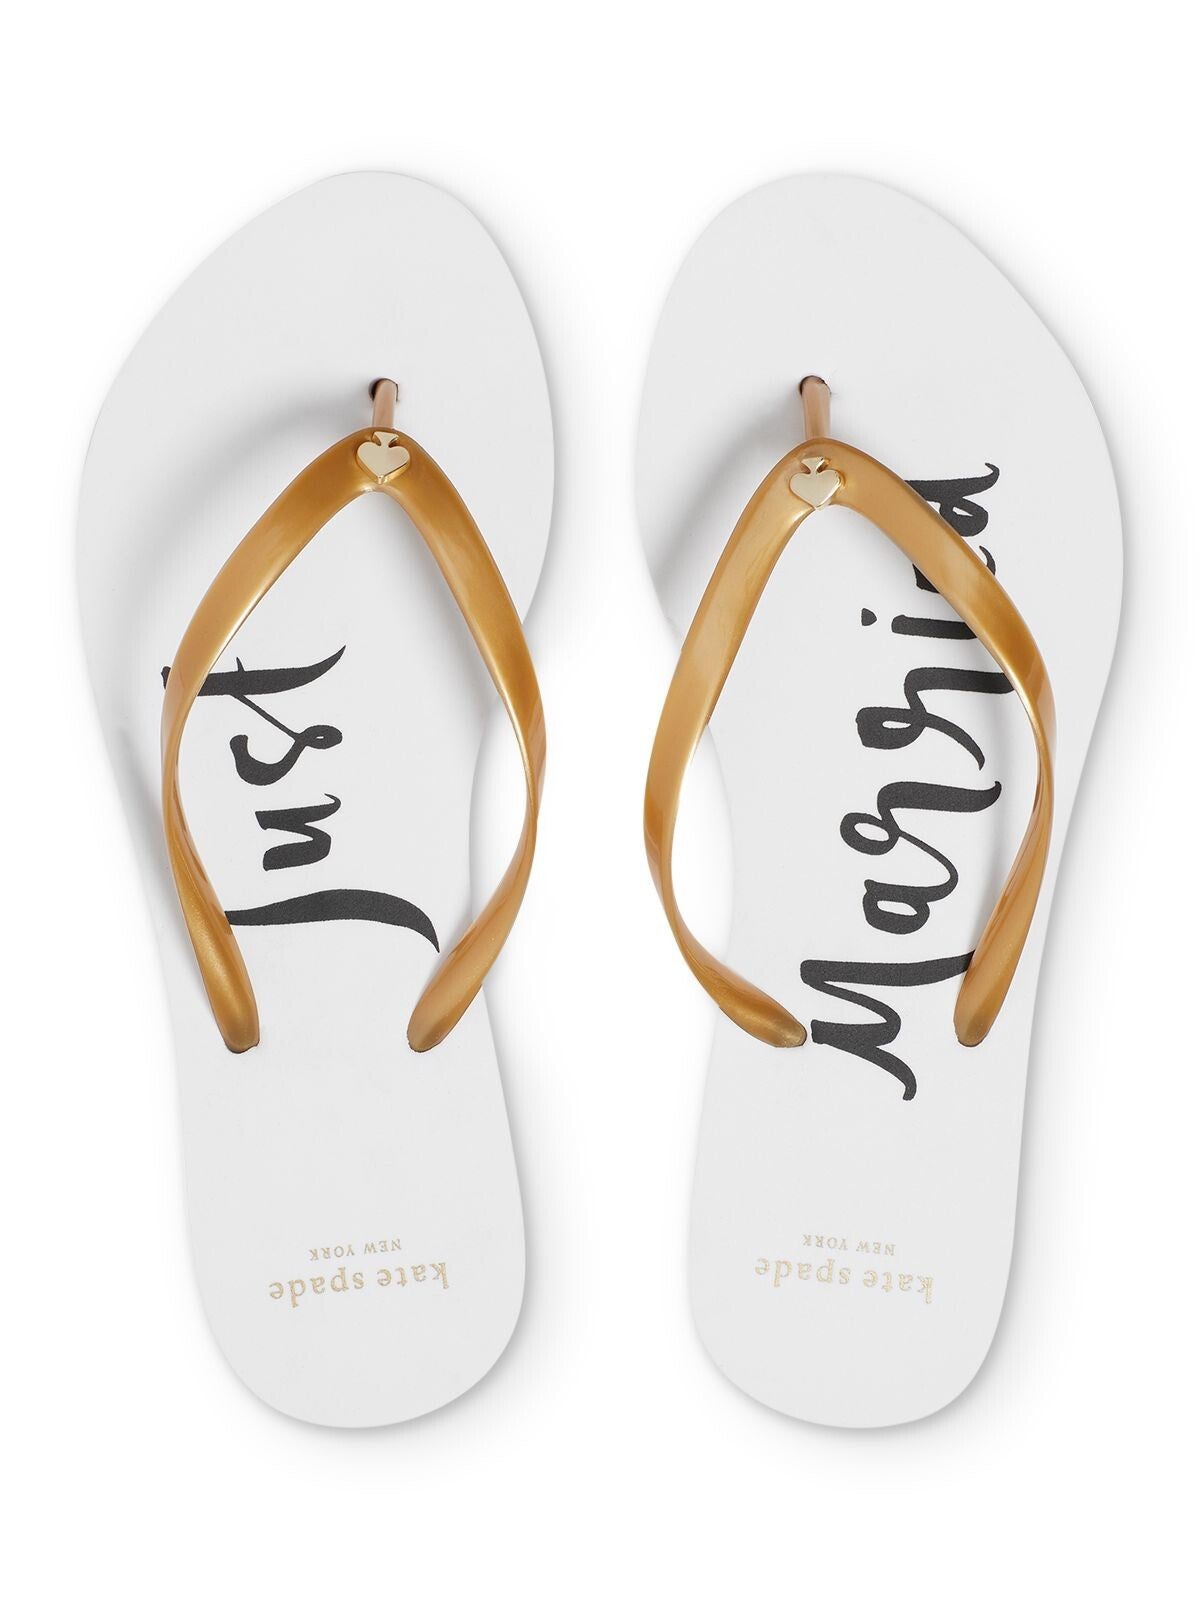 KATE SPADE NEW YORK Womens Gold Logo Nayla Round Toe Slip On Thong Sandals Shoes B